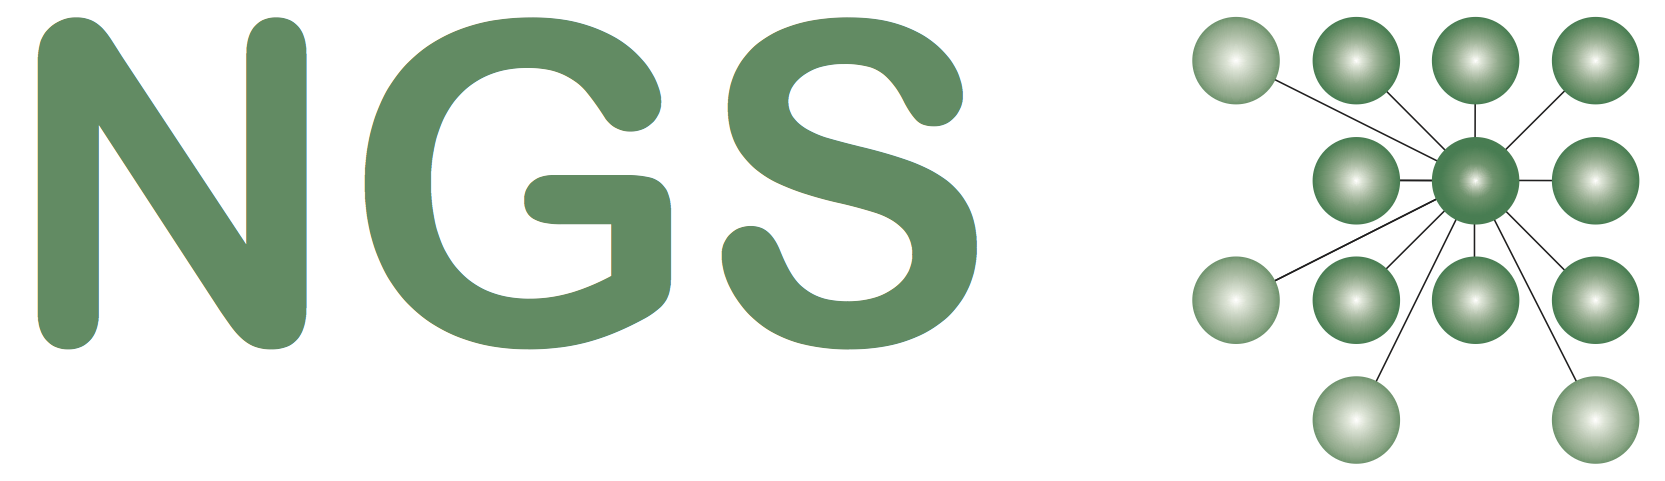 NGS Logo Cropped alt3